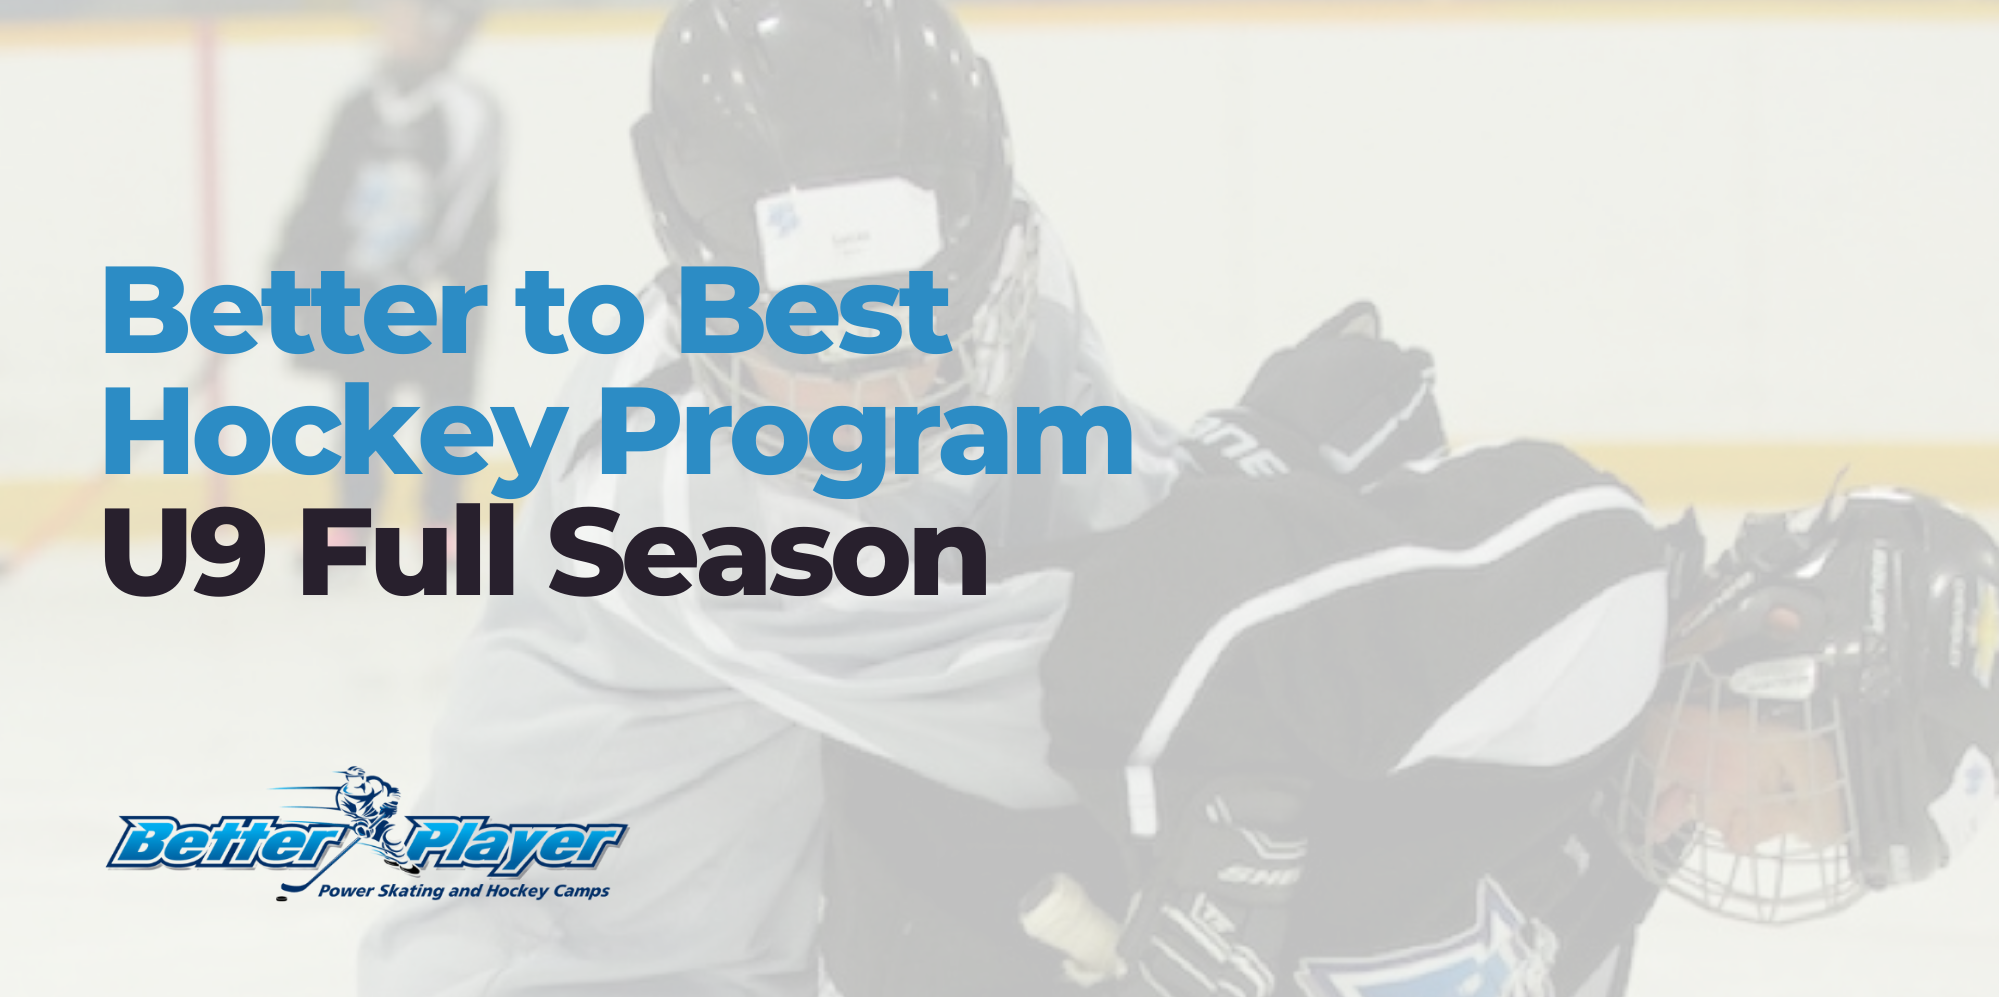 U9 Full Season | Better to Best Hockey Program